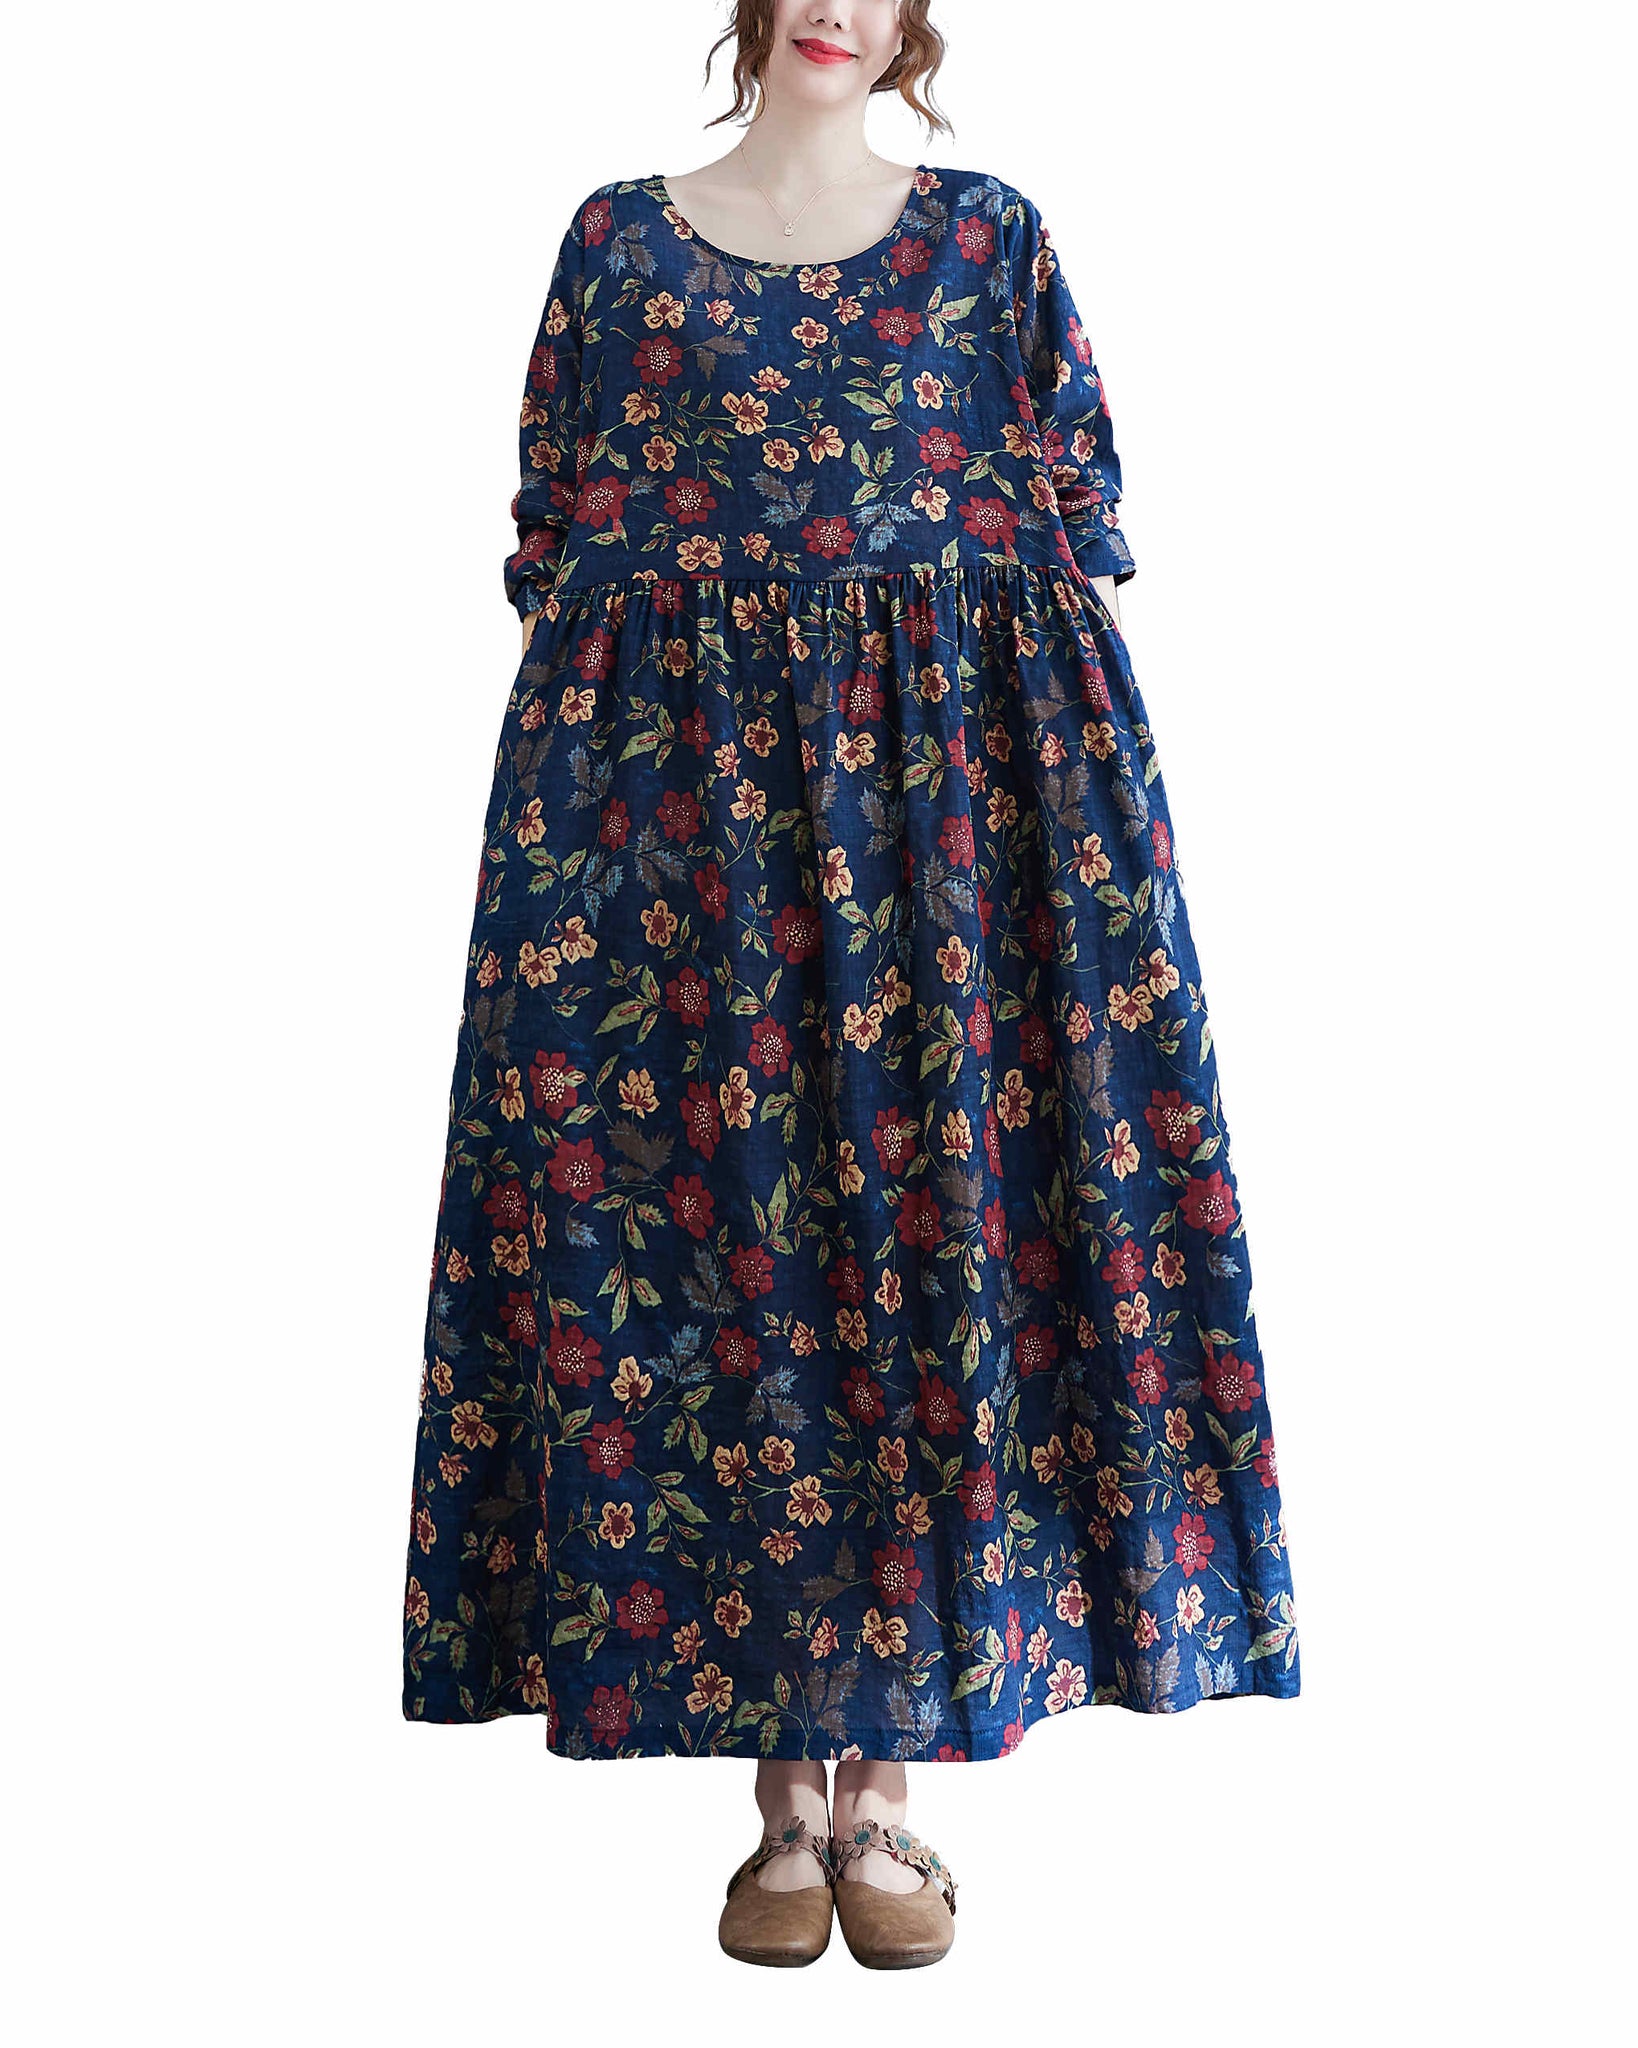 ellazhu Women Long Sleeve Crewneck Floral Print Boho Dress GA2524